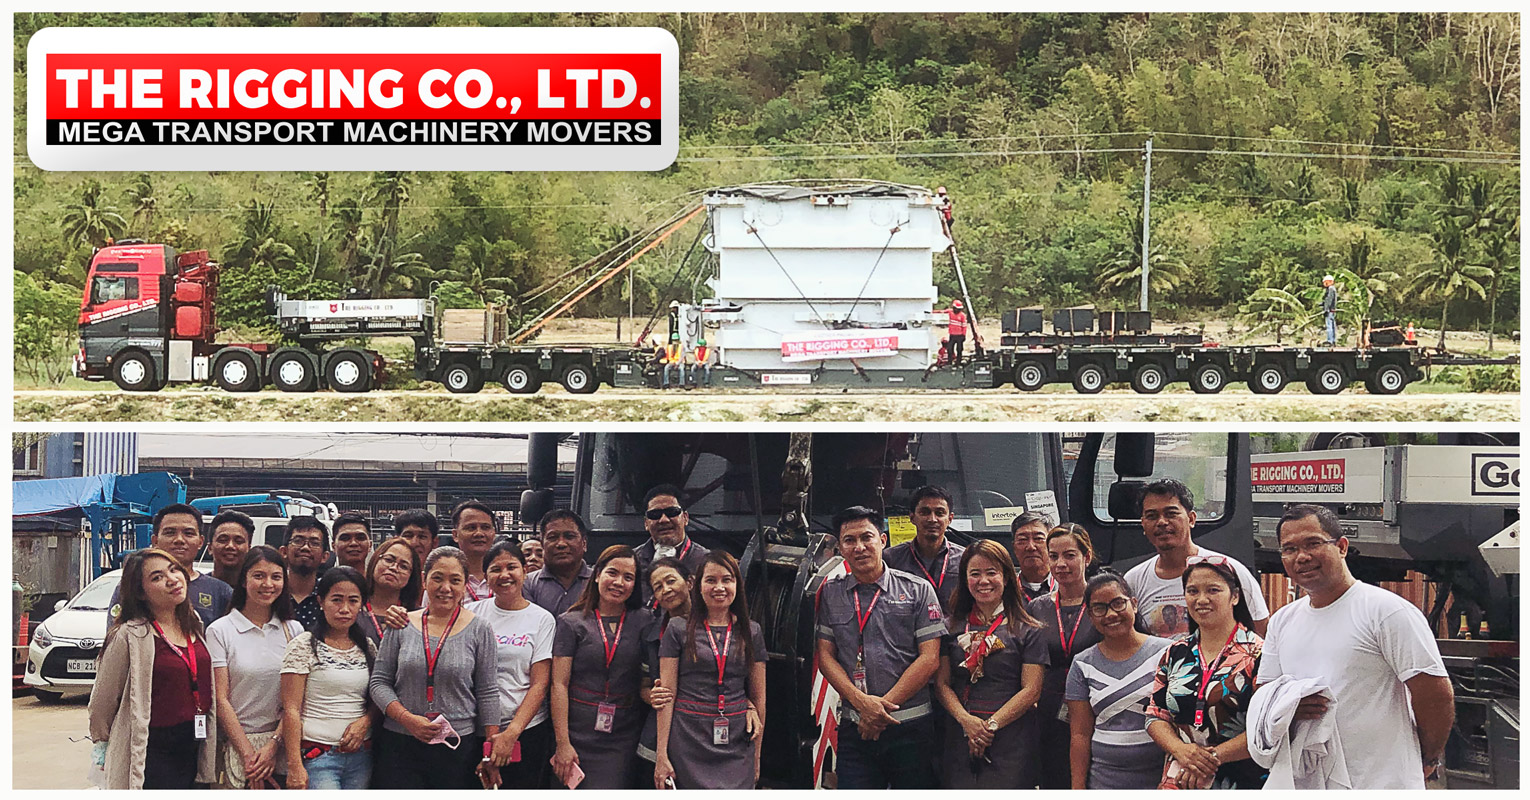 New service provider representing Philippines – The Rigging Co